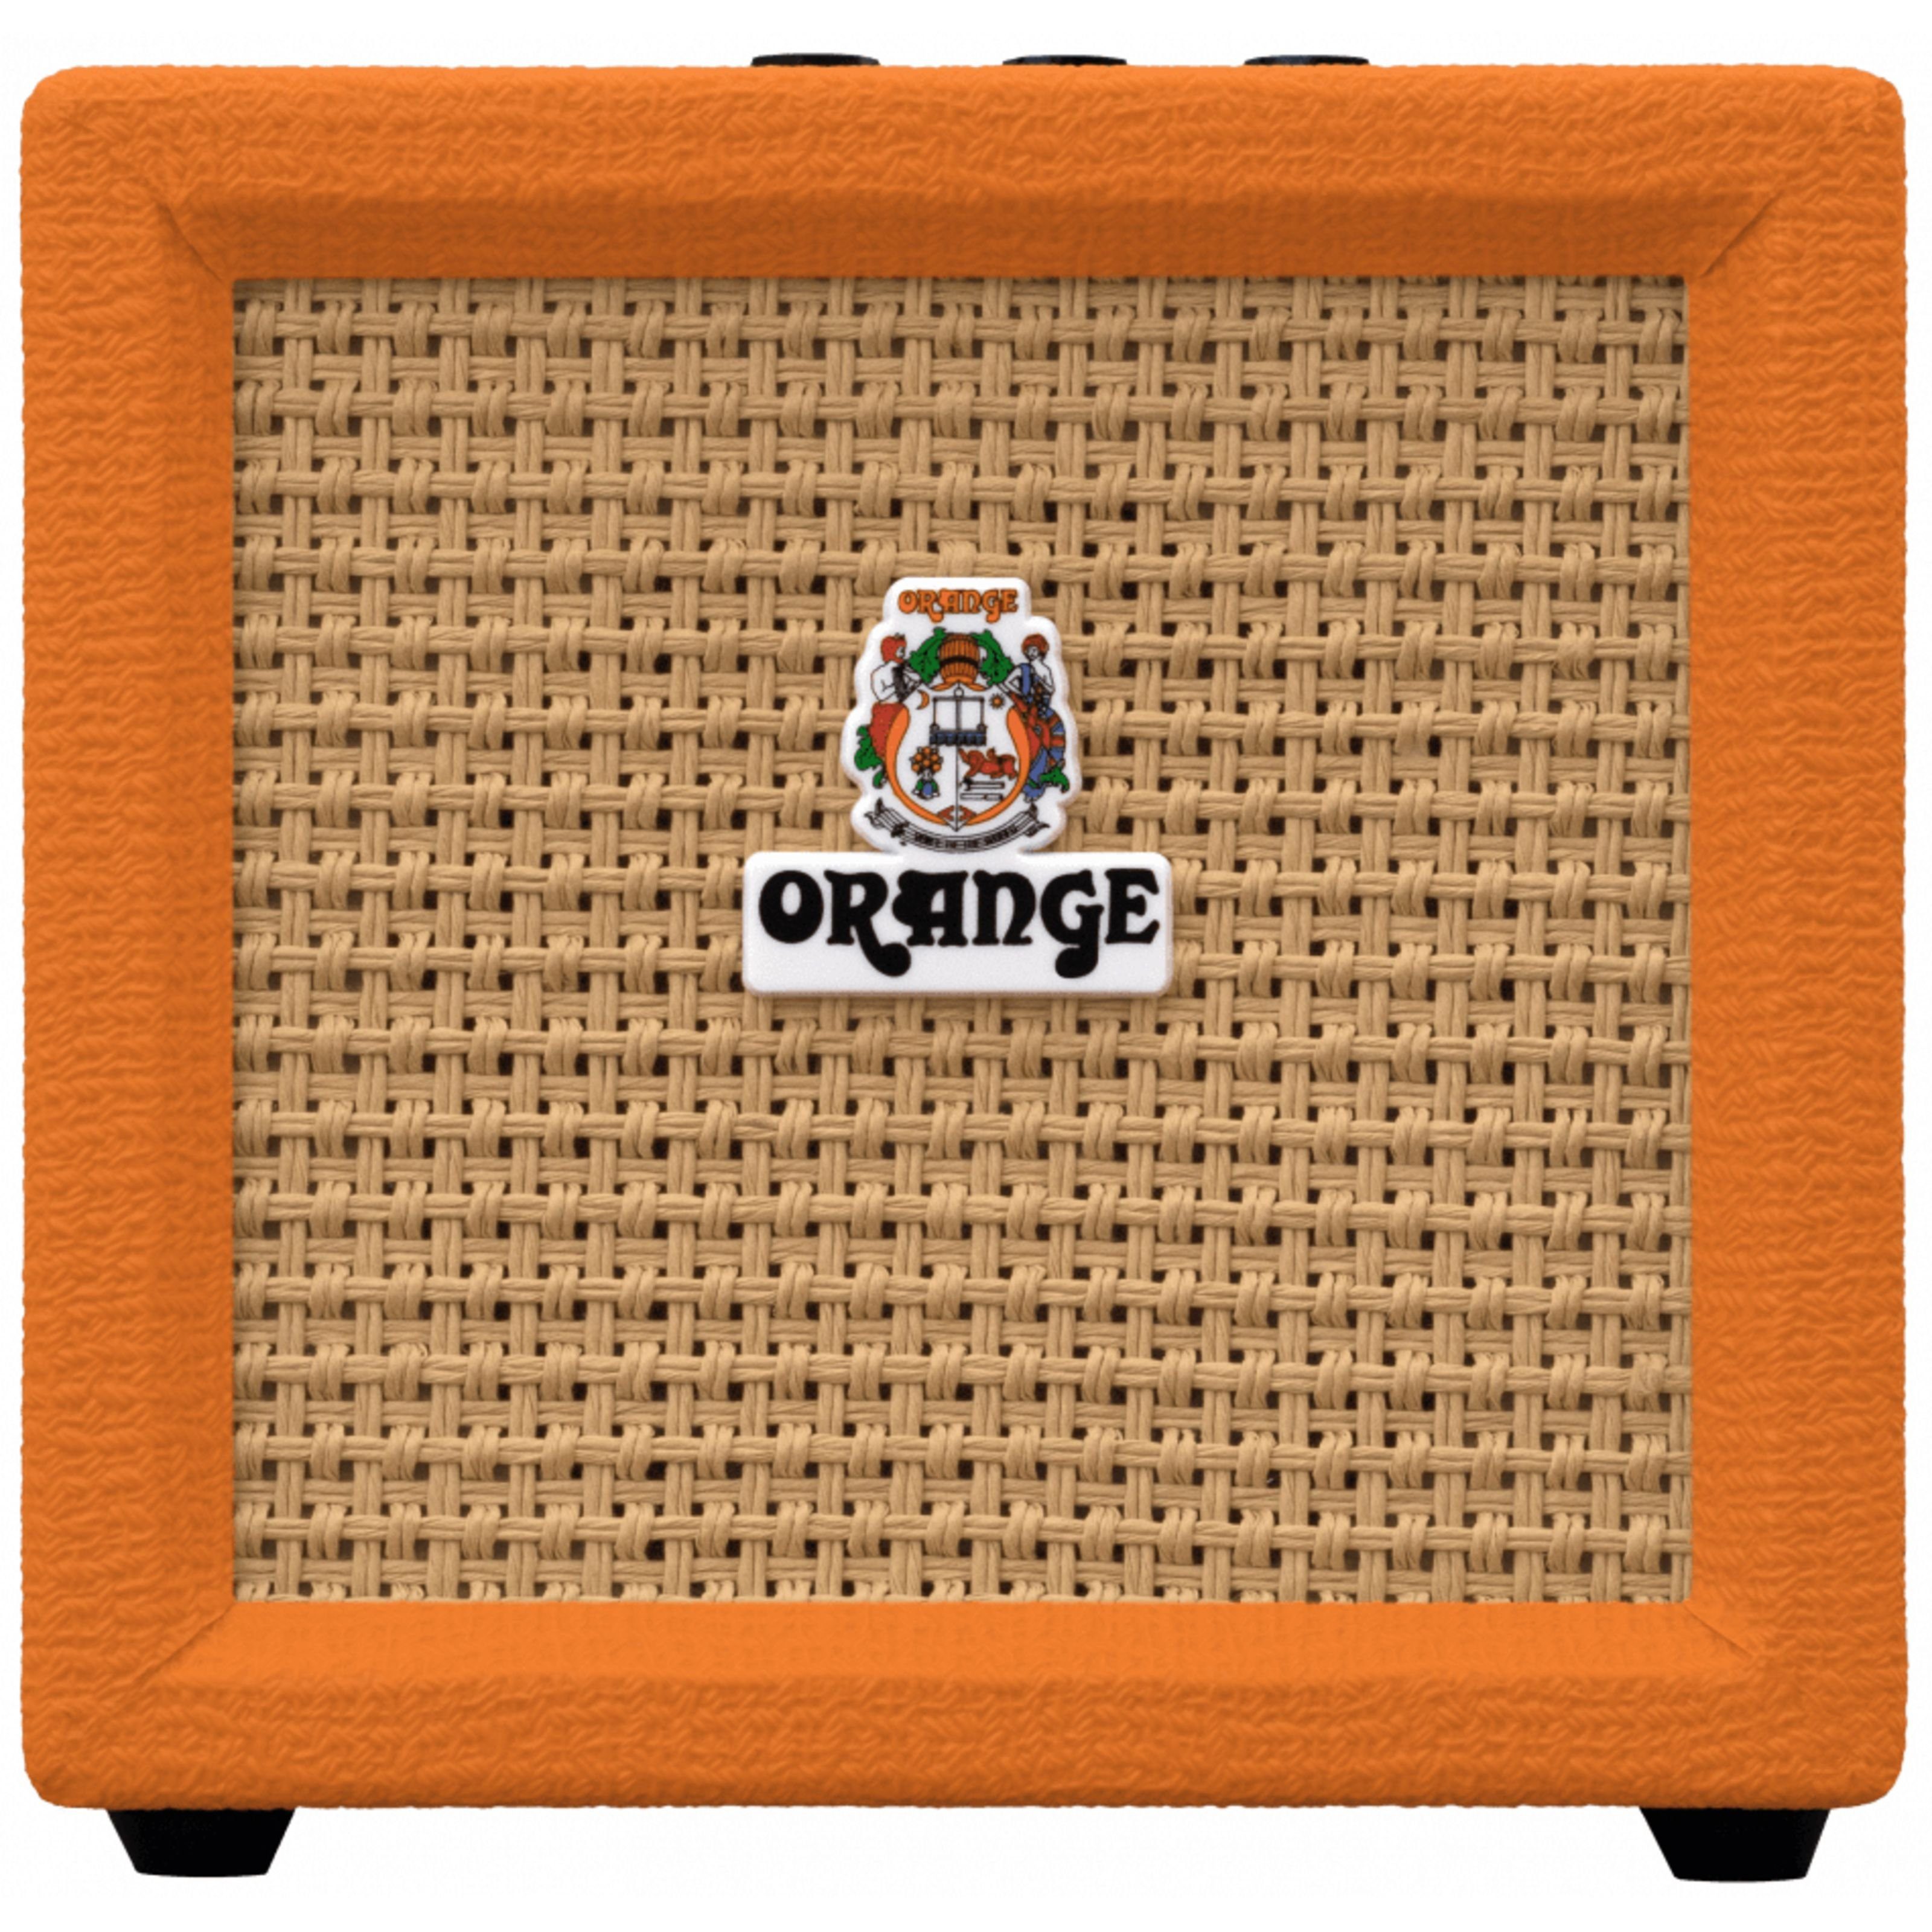 Mini E-Gitarre) (Crush Combo Transistor Verstärker Verstärker - Orange für